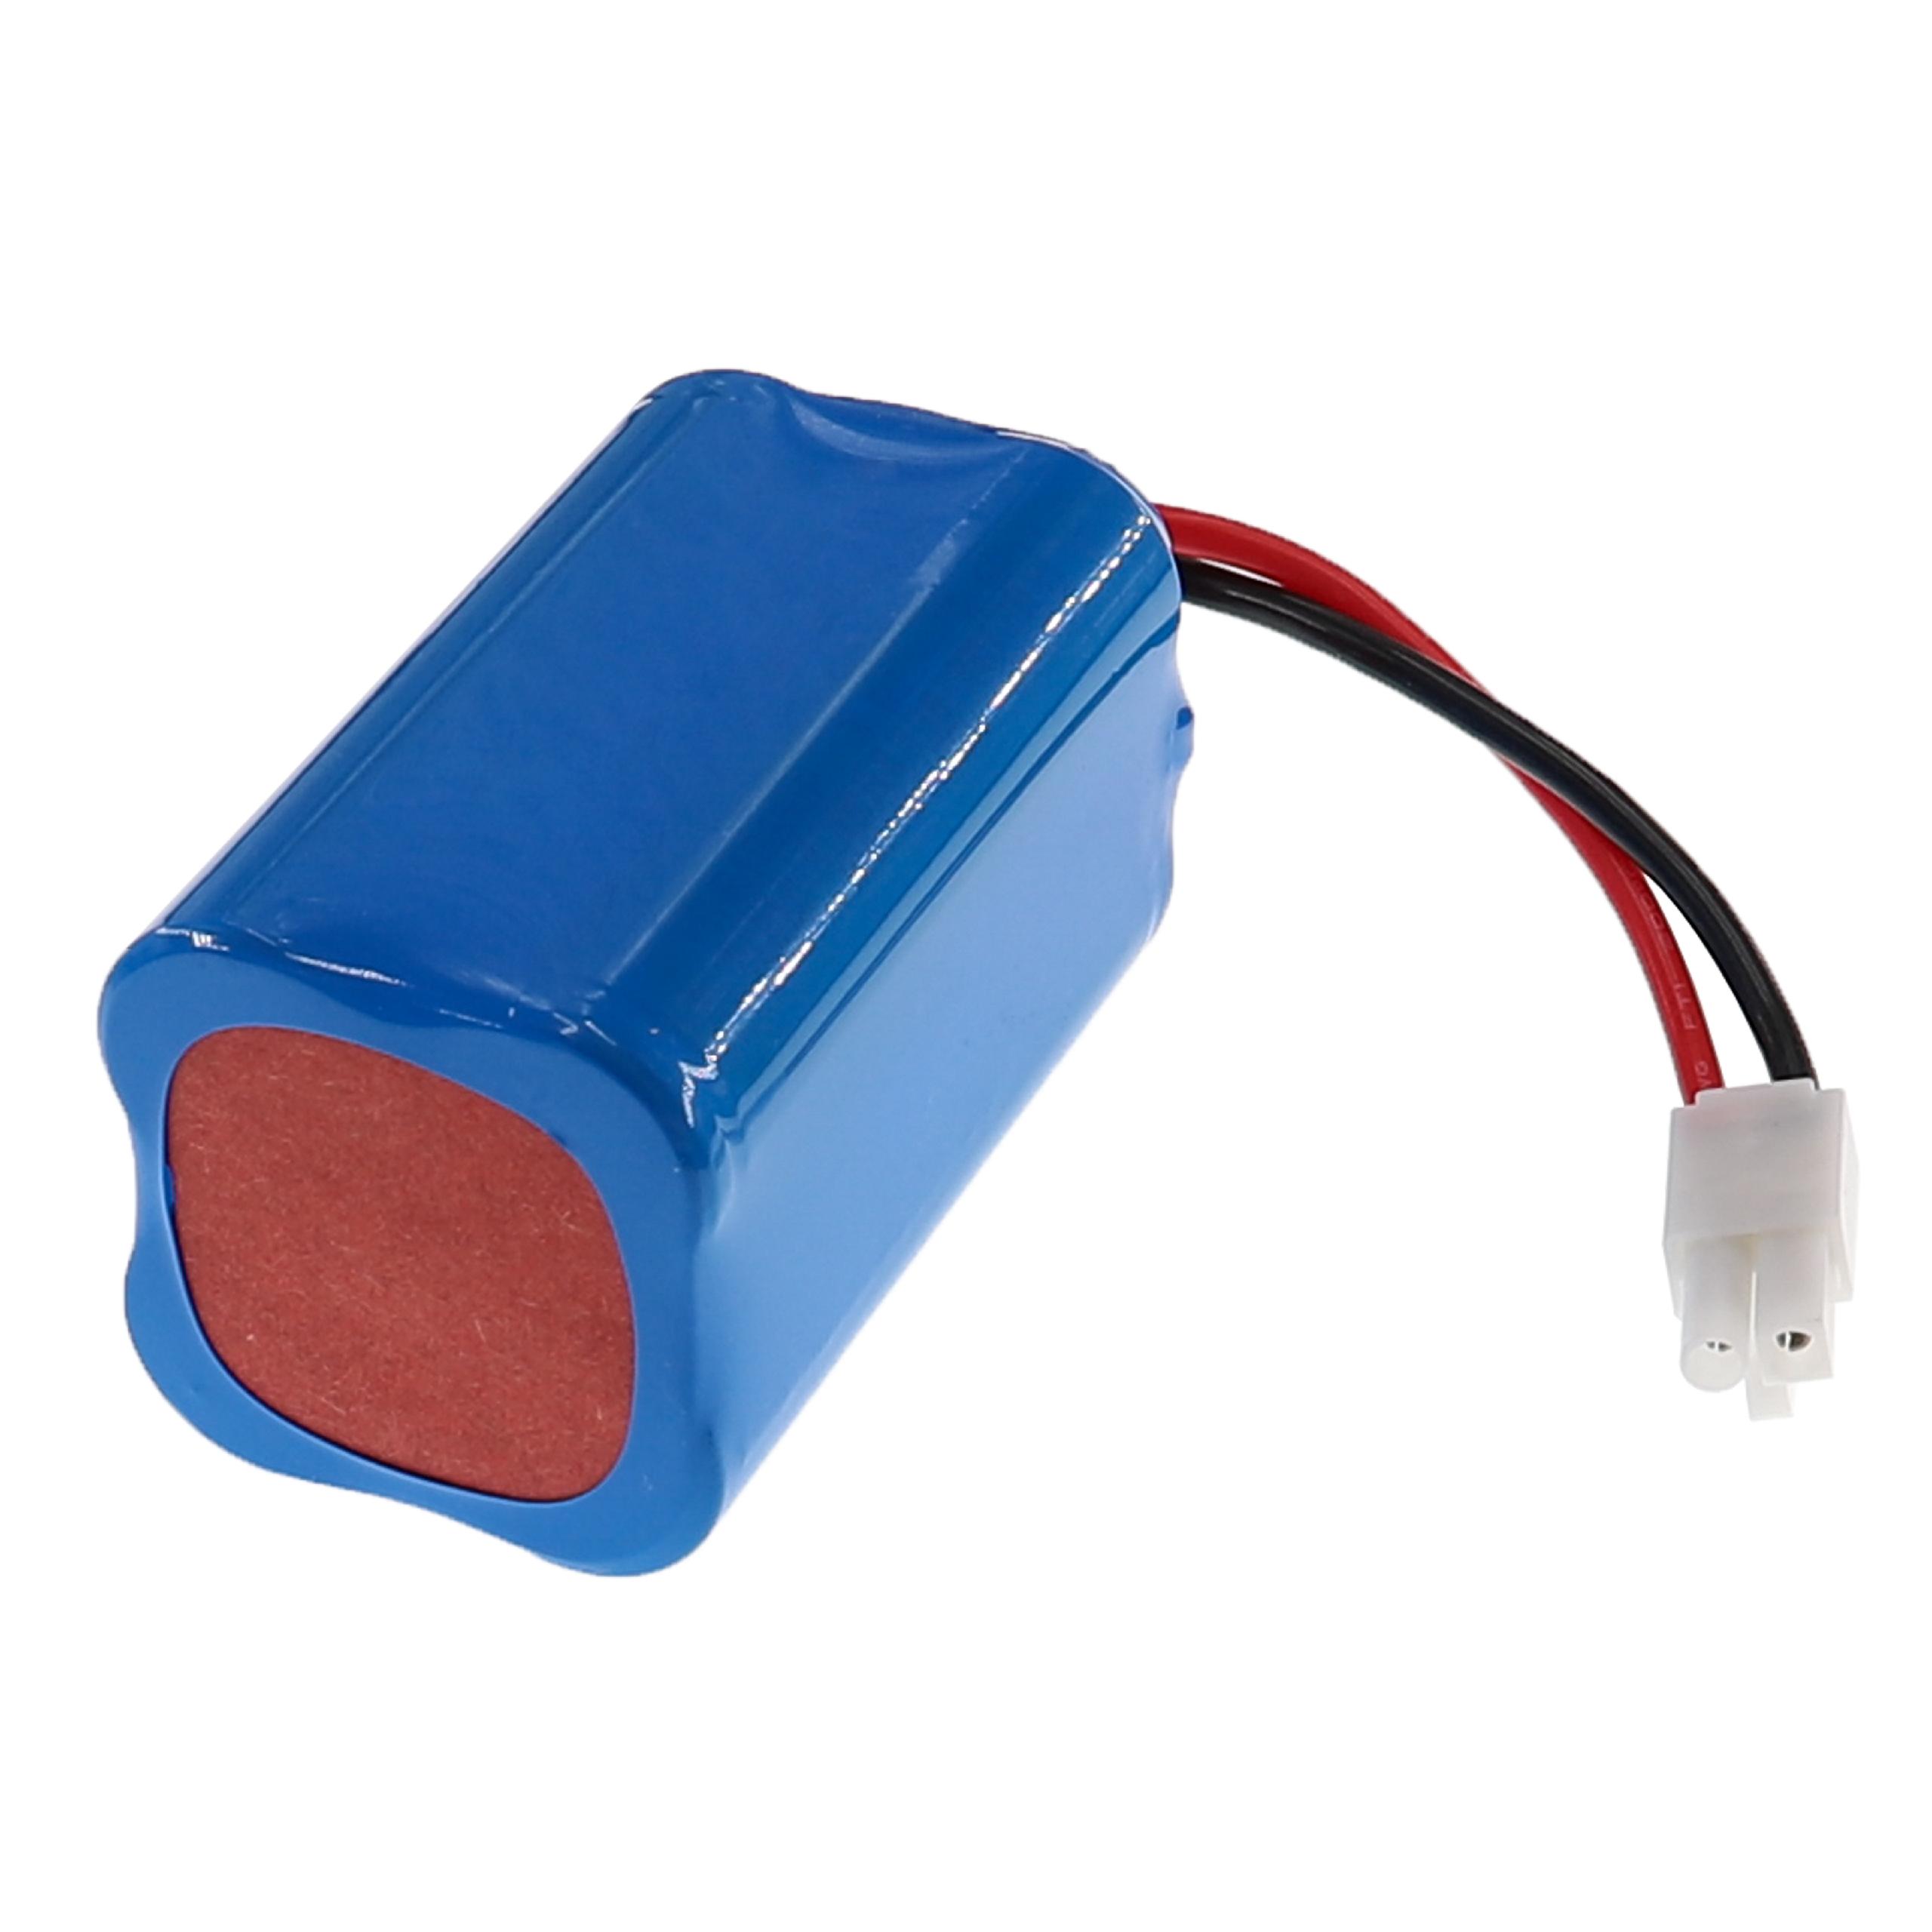 Akumulator do odkurzacza zamiennik Donkey LB01 - 2600 mAh 14,8 V Li-Ion